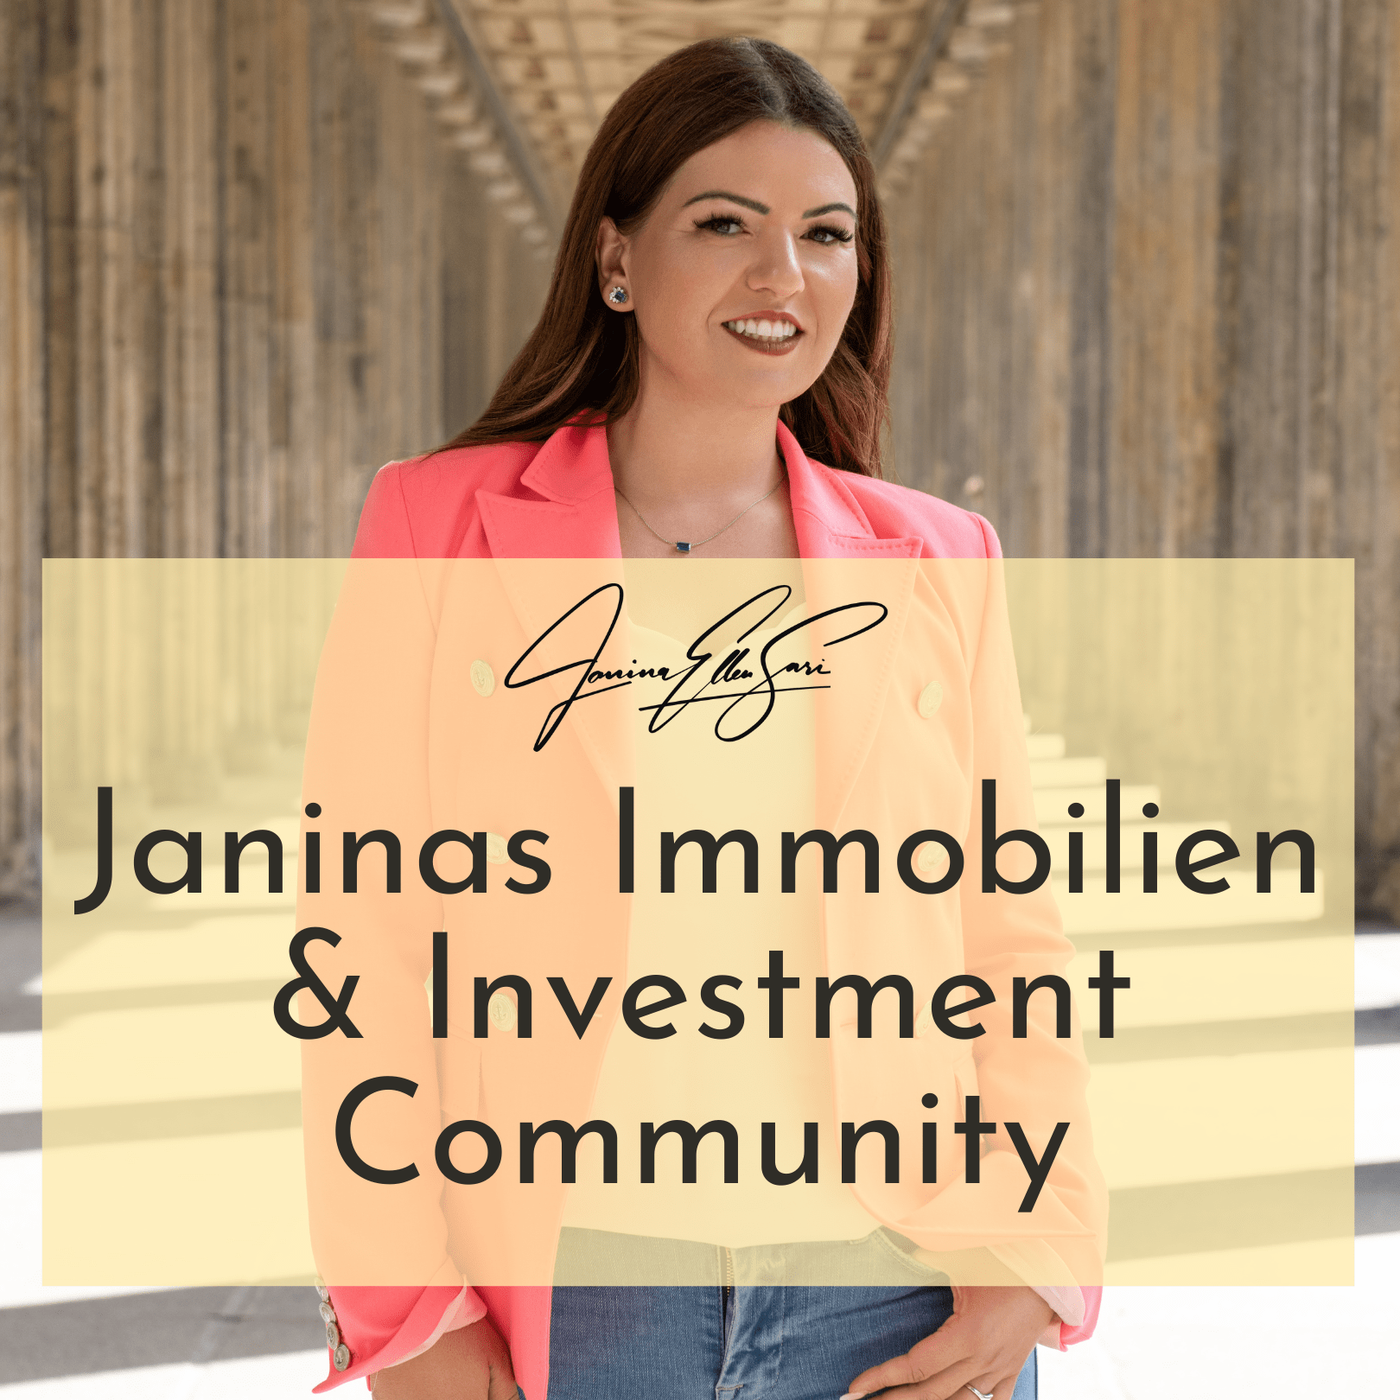 Janinas Immobilien- & Investmentcommunity